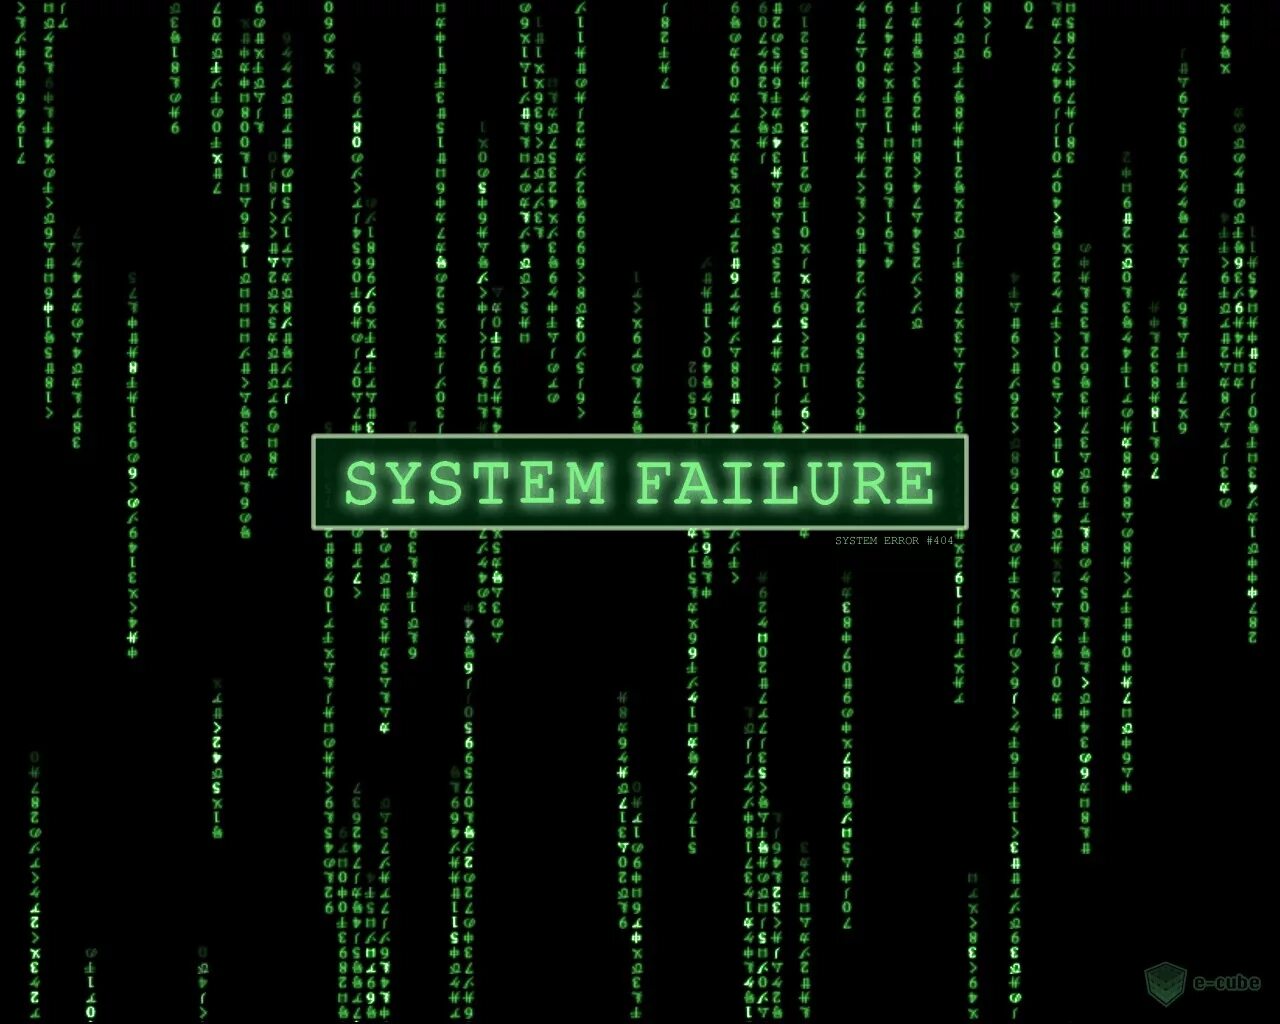 System error s. System failure. Матрица ошибок. Матрица System failure. Матрица сбой системы.